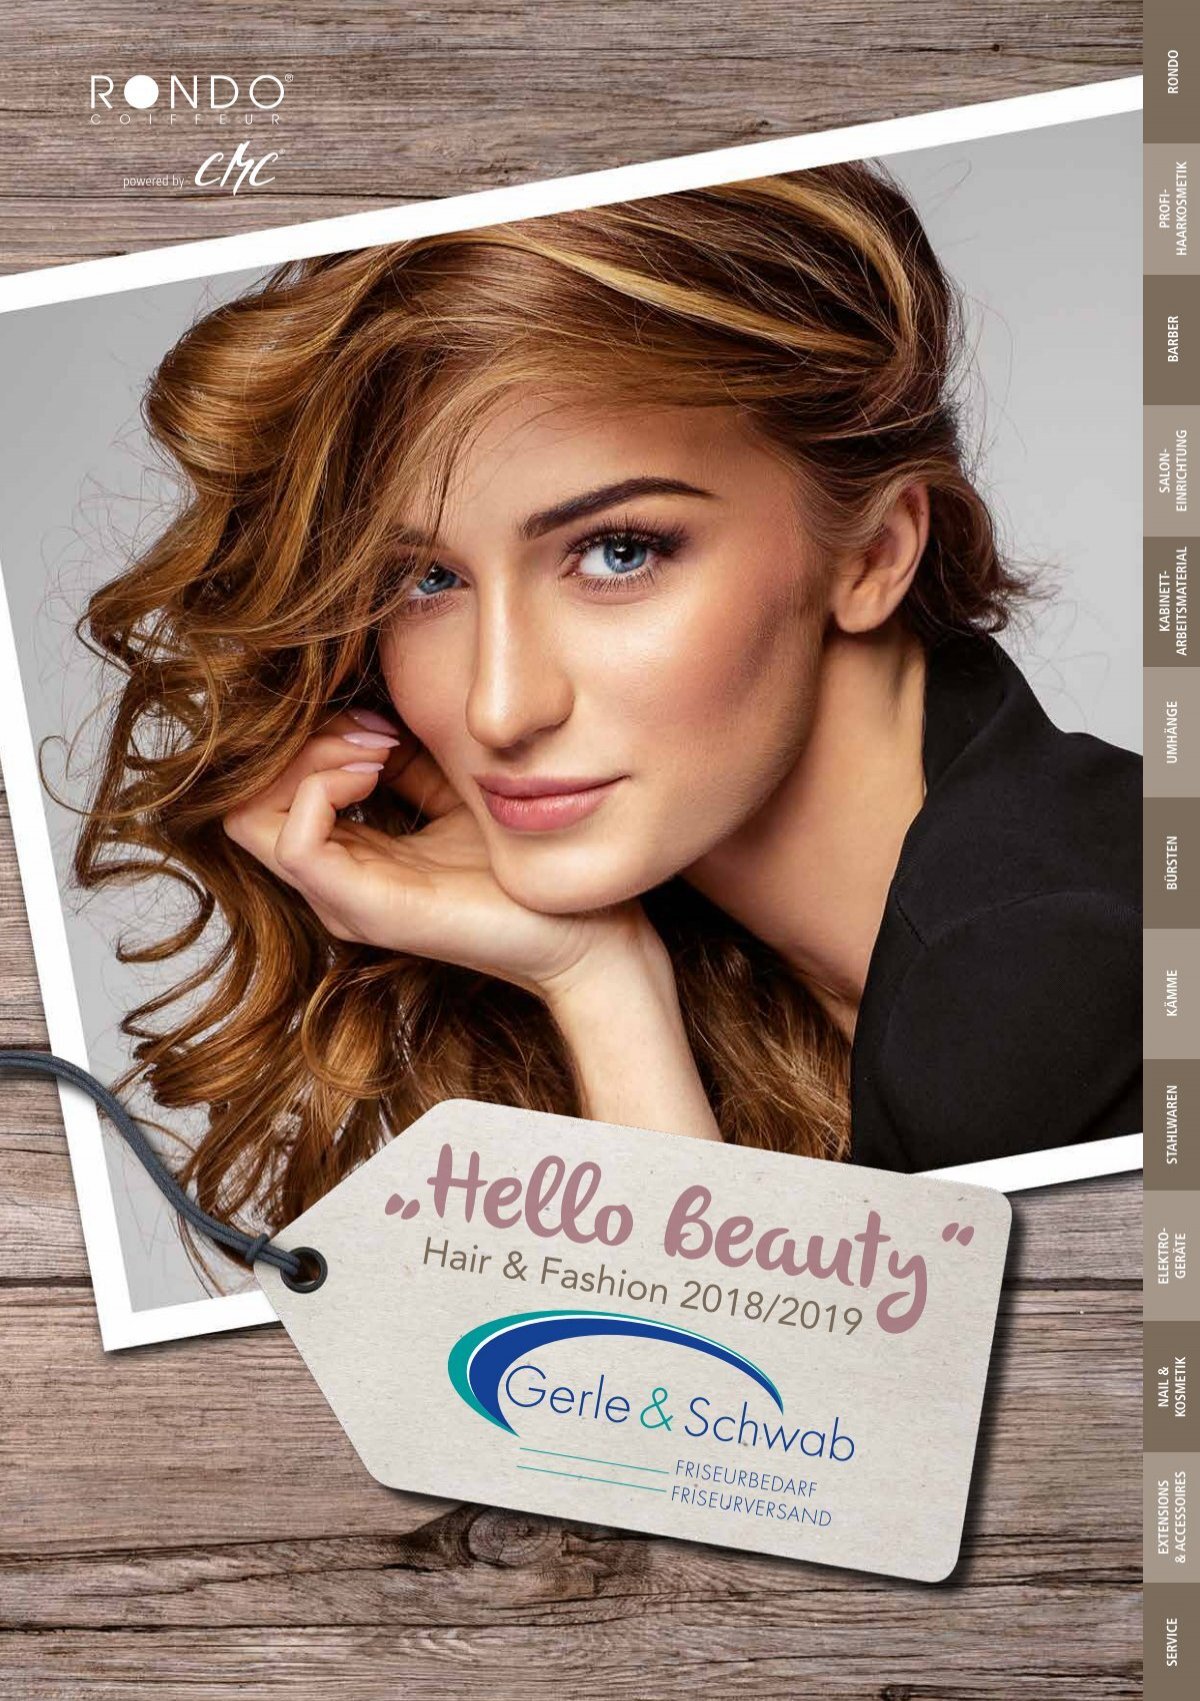 Gerle&Schwab "Hello Beauty" - Fashion Hair 2018/2019 &